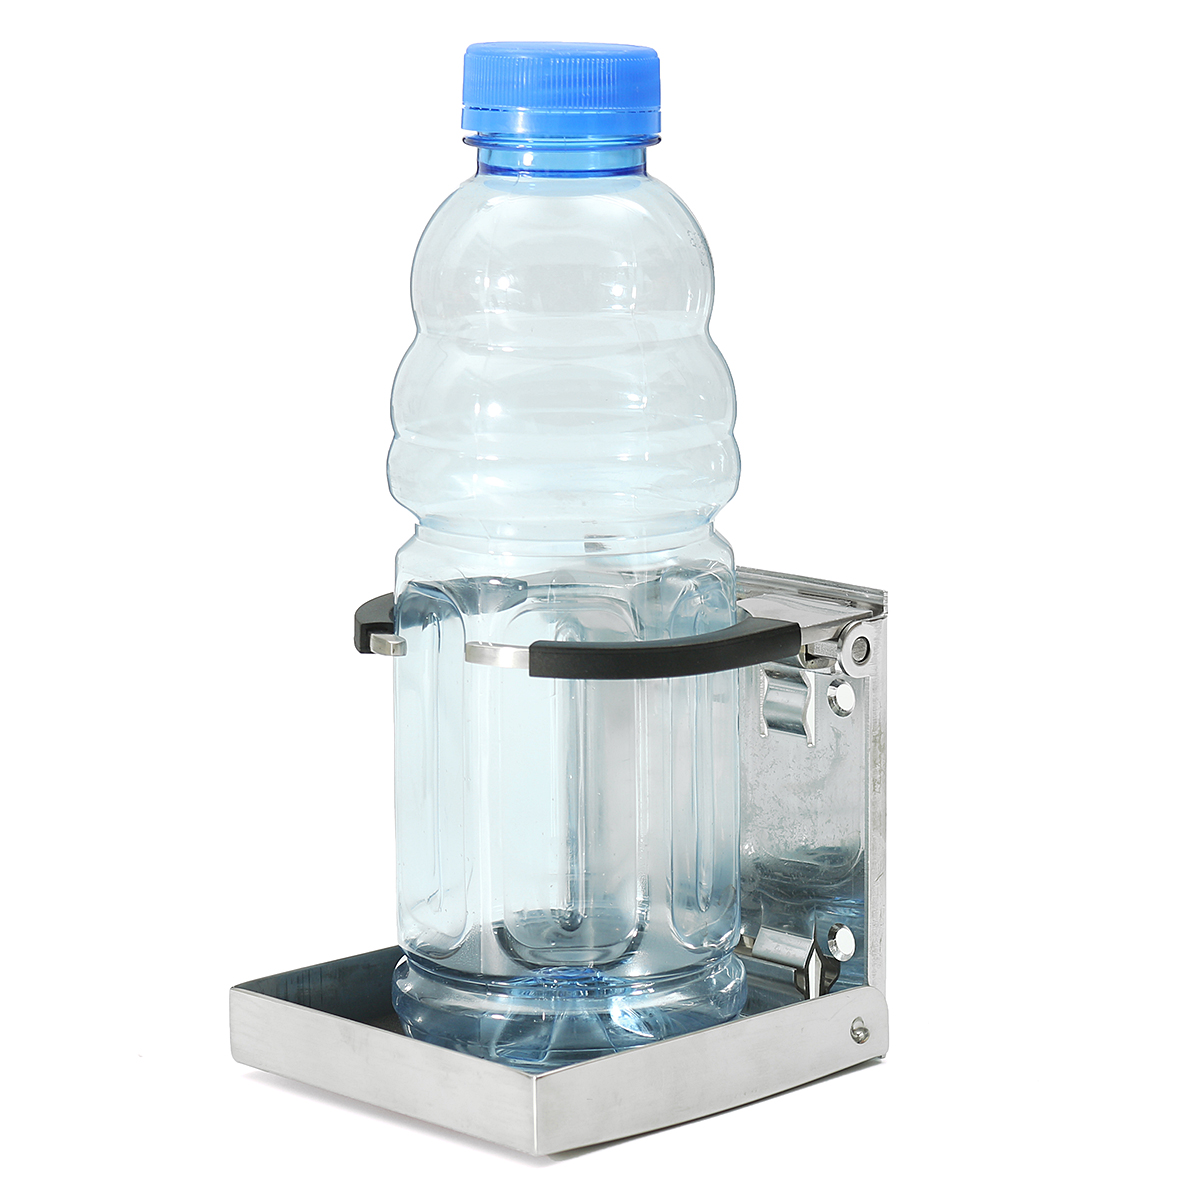 Stainless-Steel-Adjustable-Folding-Drink-Cup-Holder-Water-Bottle-Holder-for-MarineBoatCarCaravan-1301923